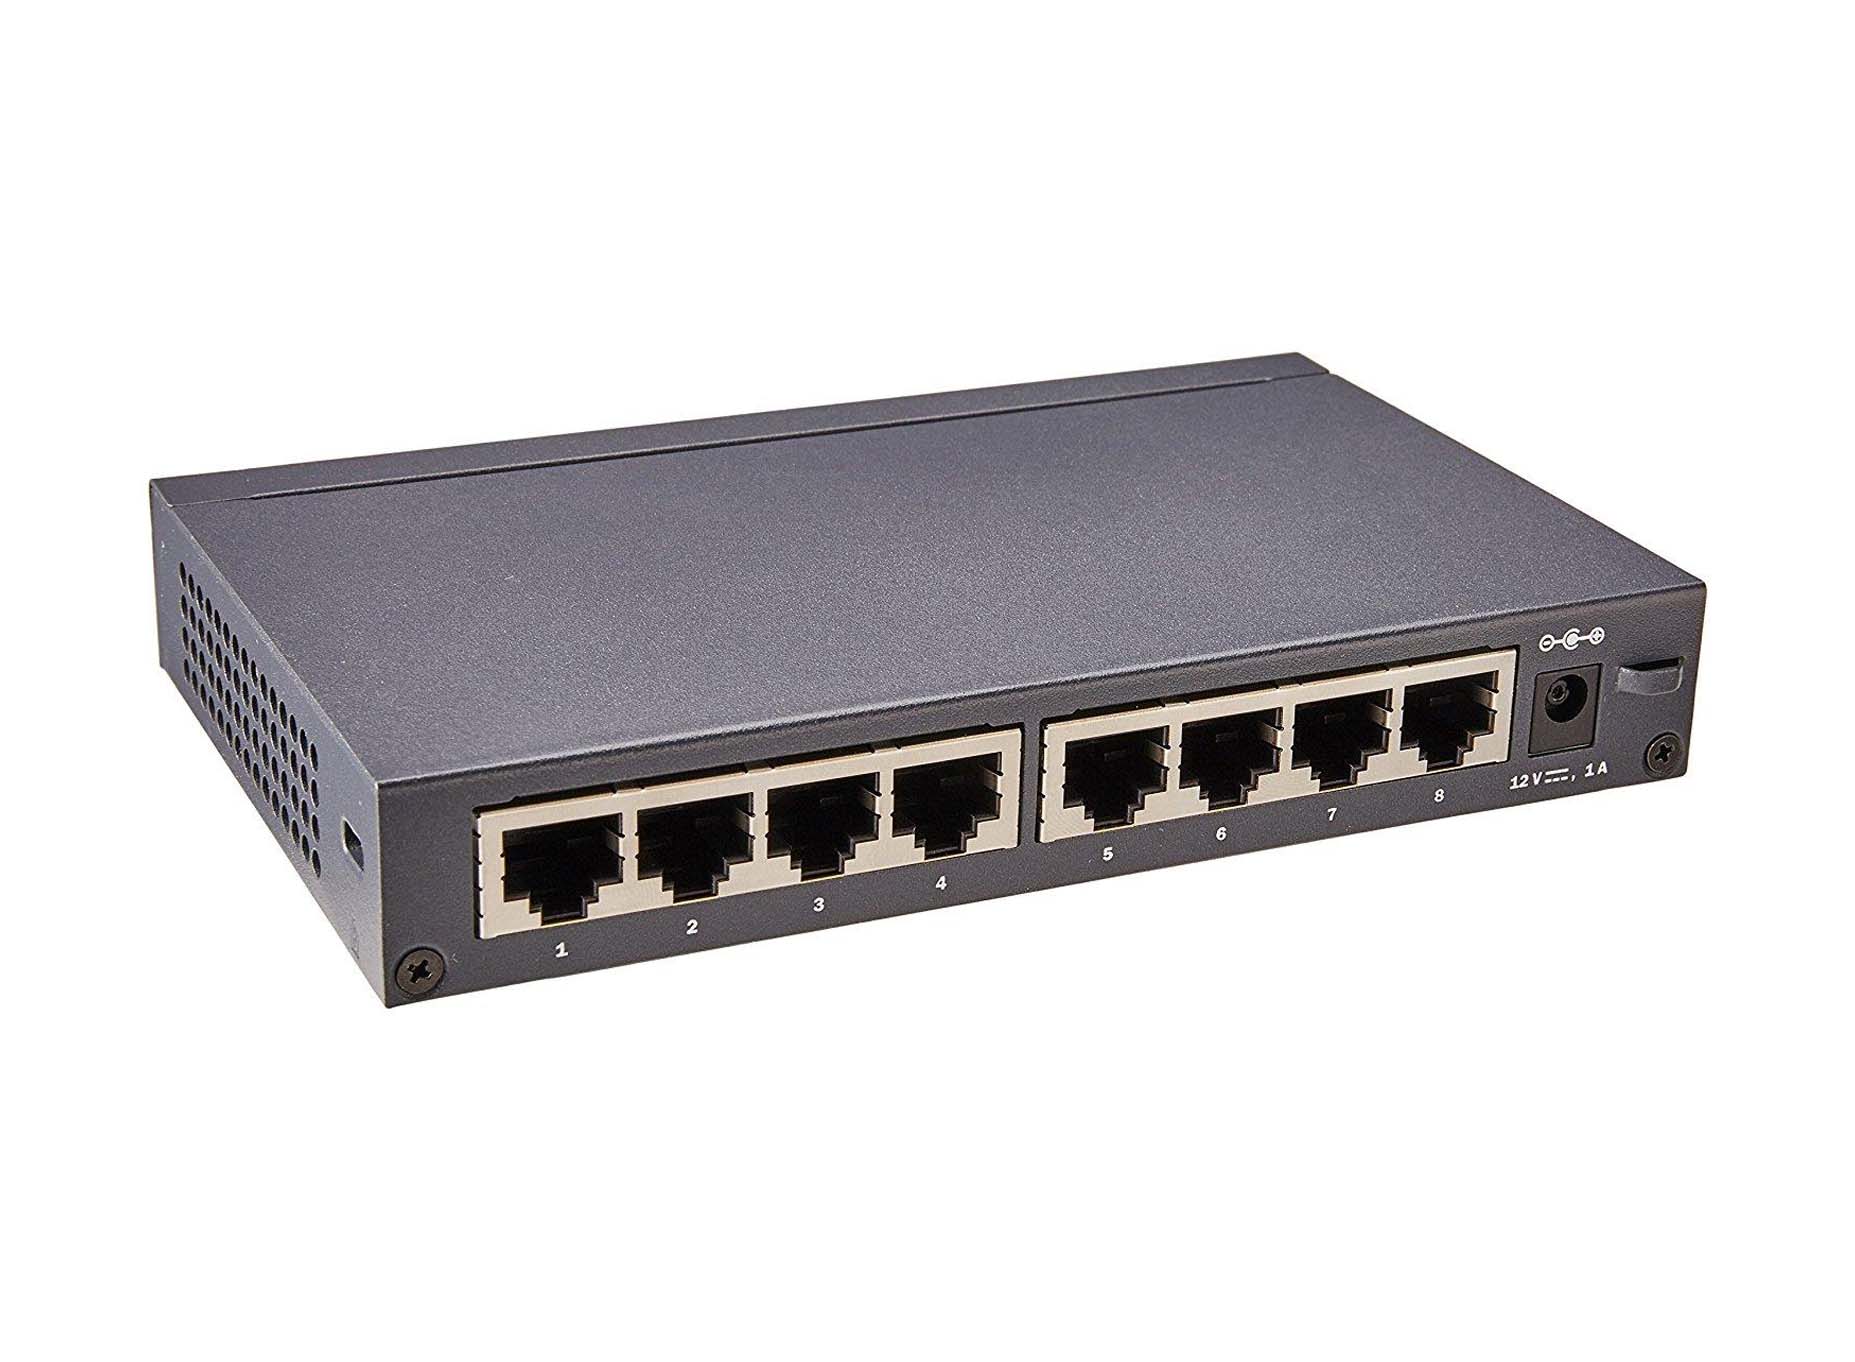 Harga HP 1420-8G 8-Ports Gigabit Ethernet Unmanaged Switch (JH329A)